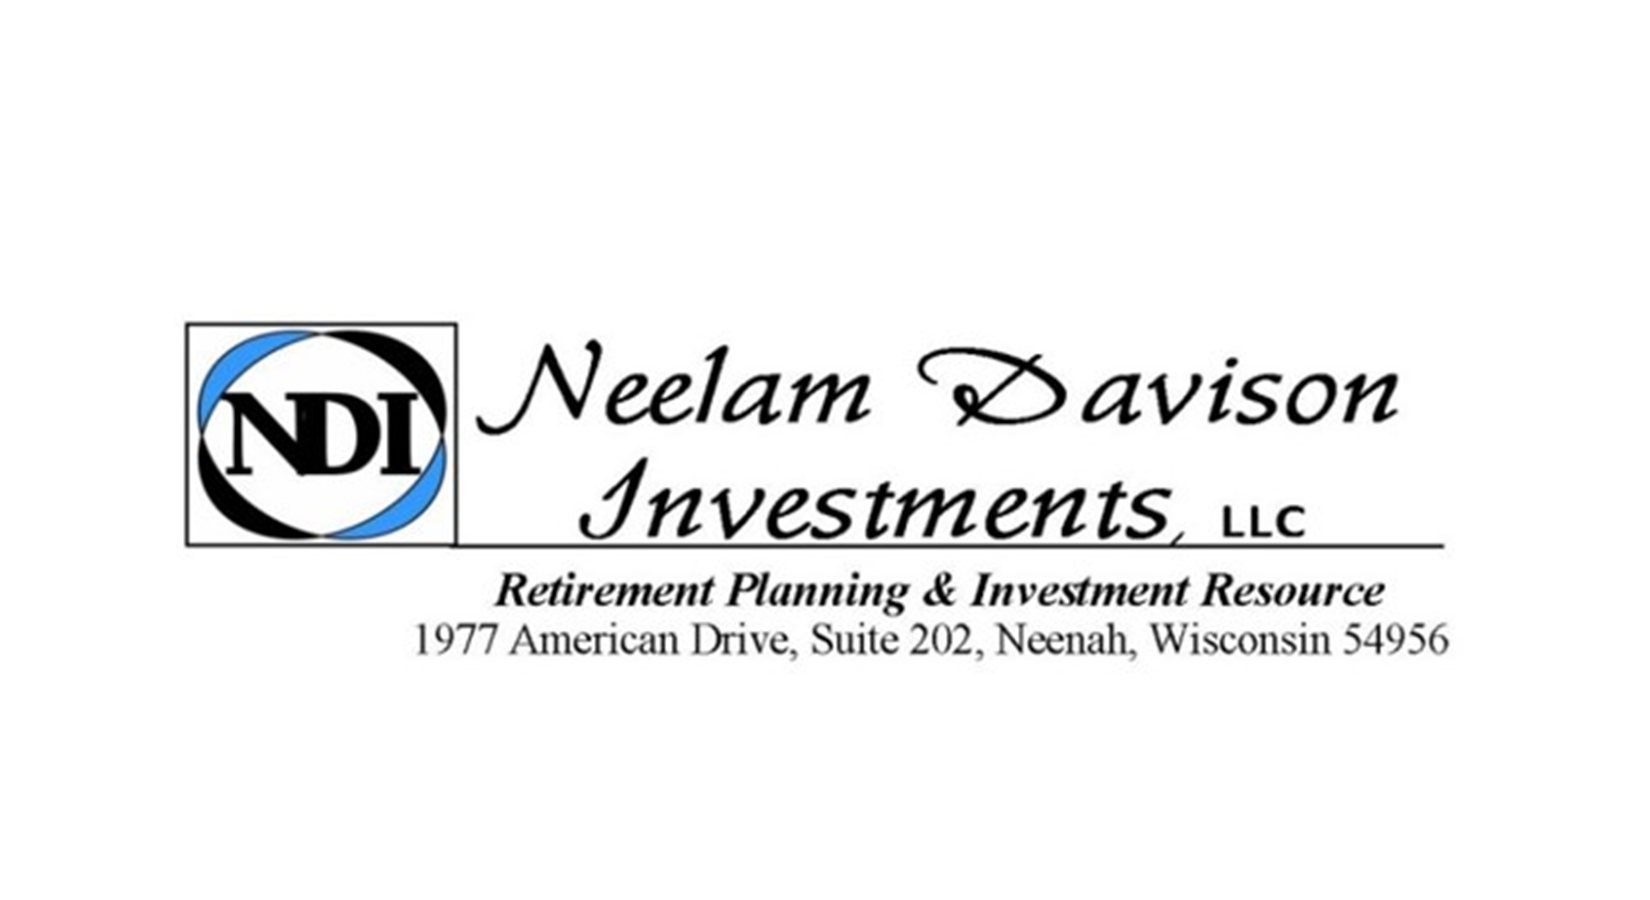 Neelam Davison Investments, LLC